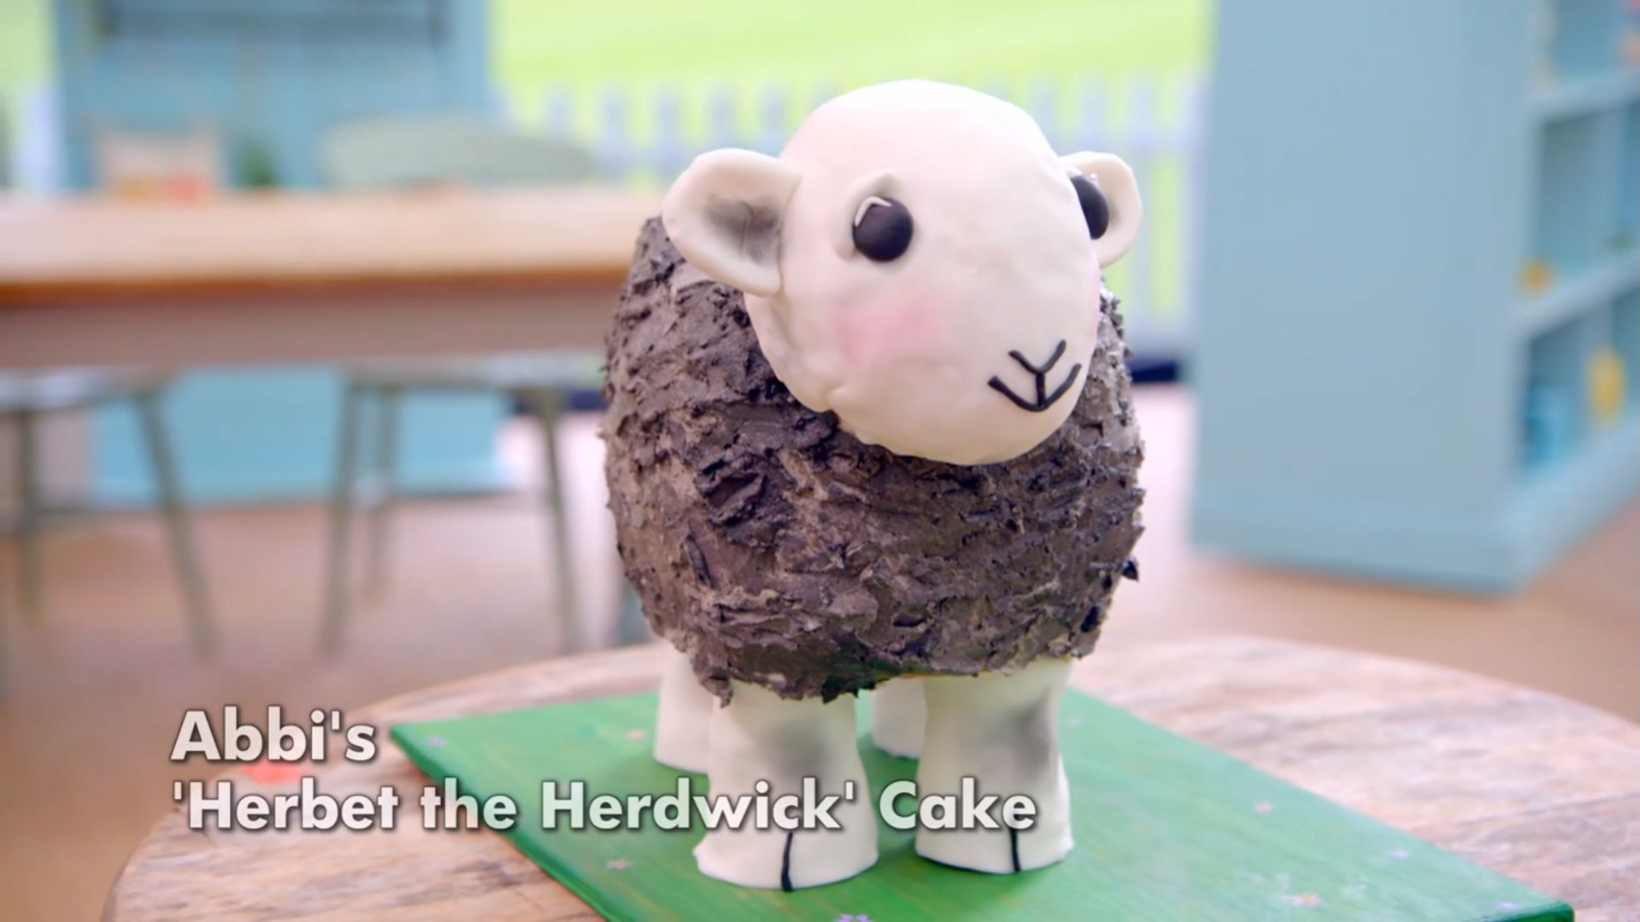 Abbi's Herbert the Herdwick Showstopper Cake from The Great British Baking Show's Cake Week